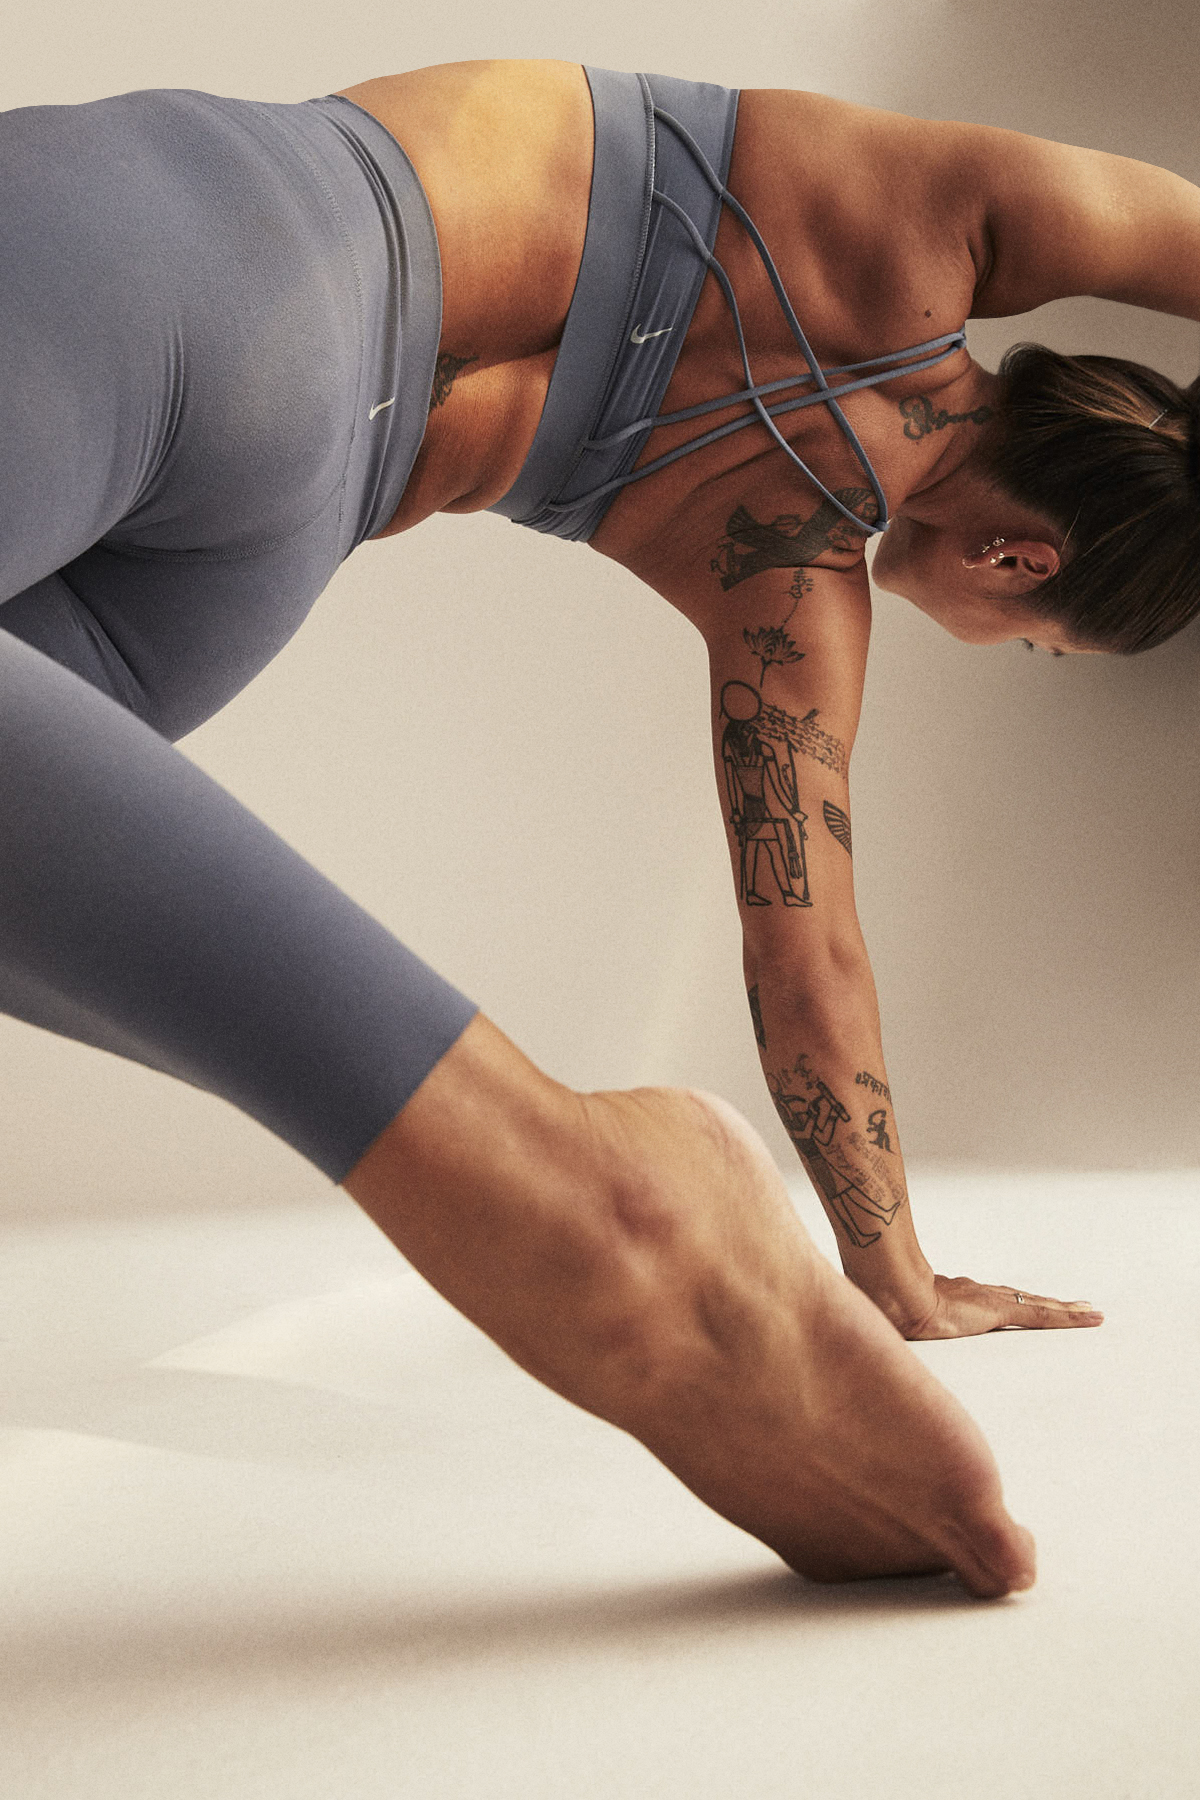 Nike Yoga - Demetrius May